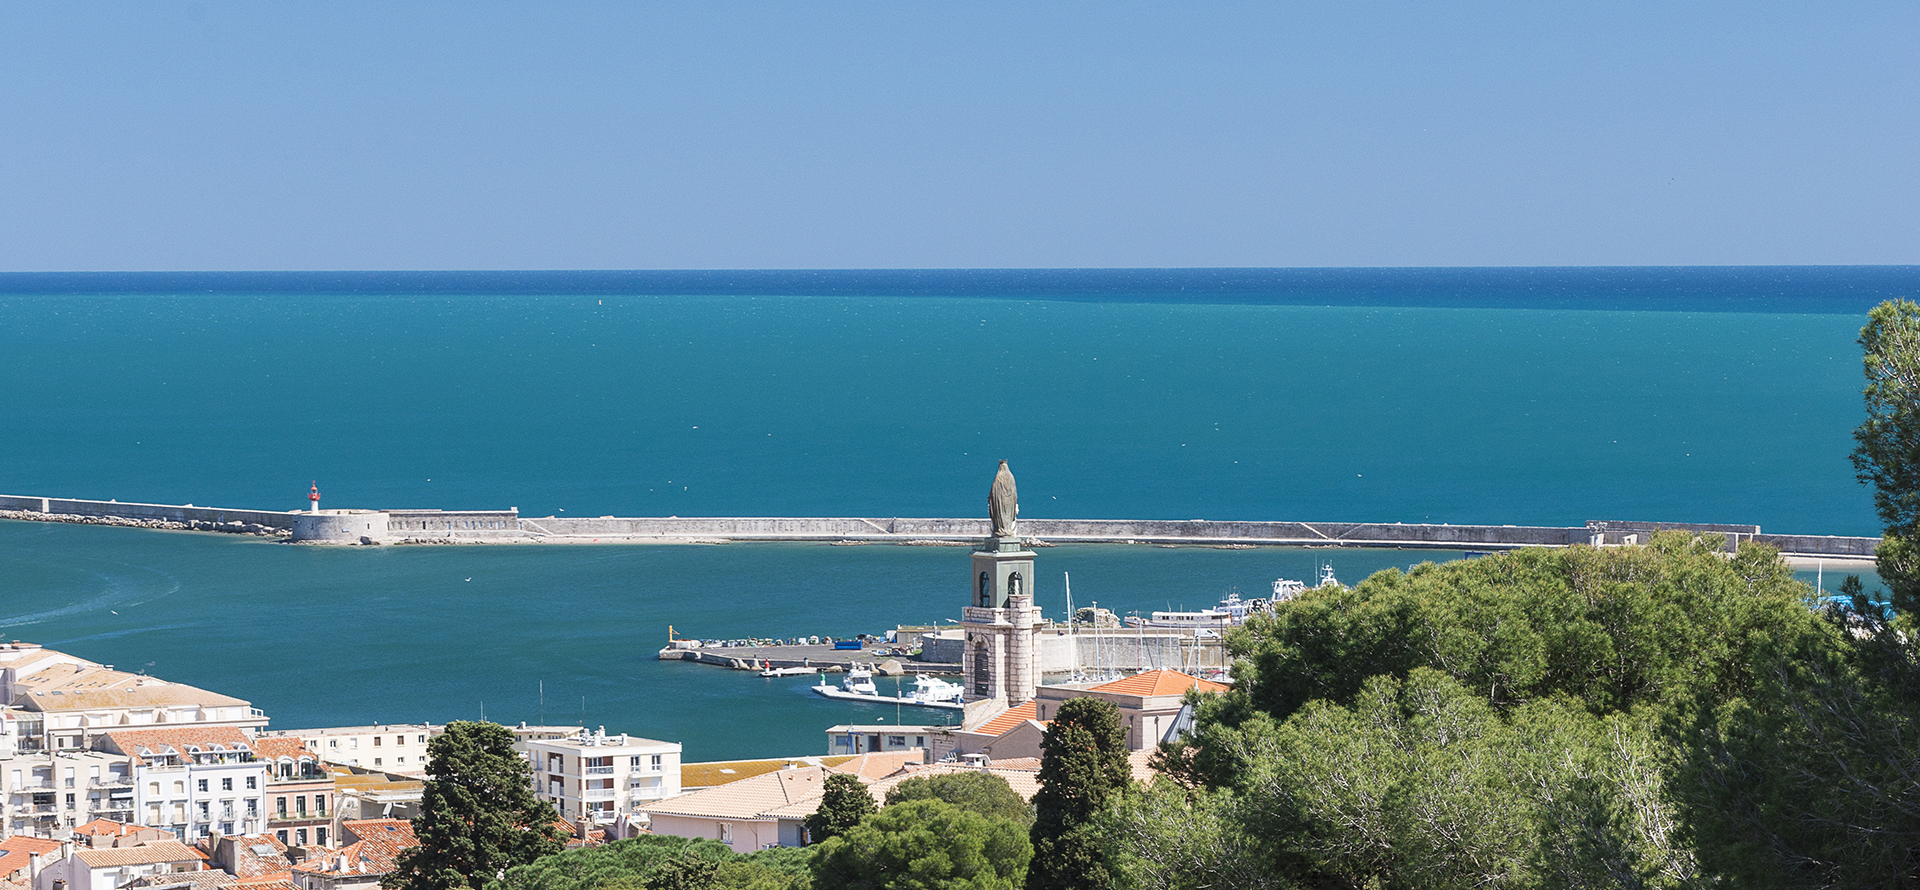 Vista alta del puerto de Sète